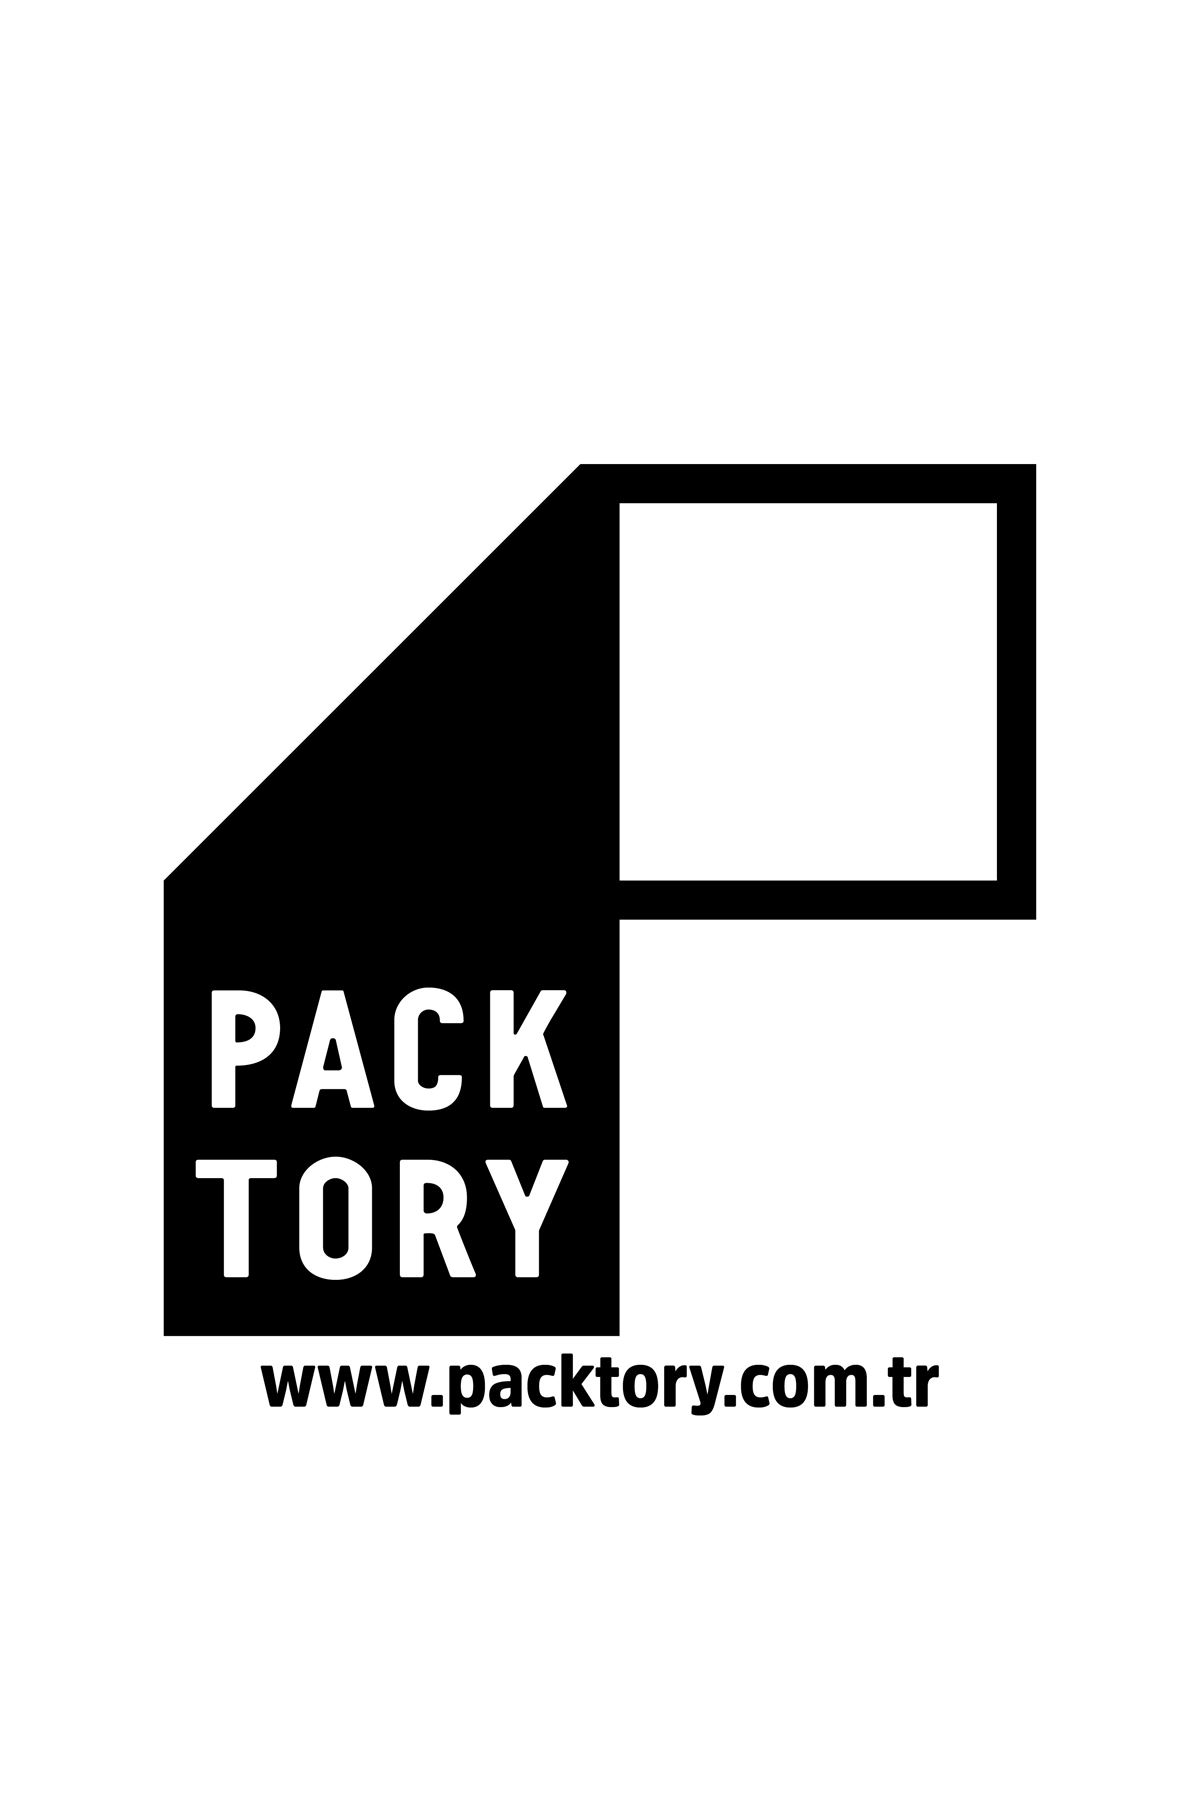 Packtory 10 x 34 + 3 Cm  Aluminyum Yan Körüklü Quadro Ambalaj 500 Gr. 250 Adet 